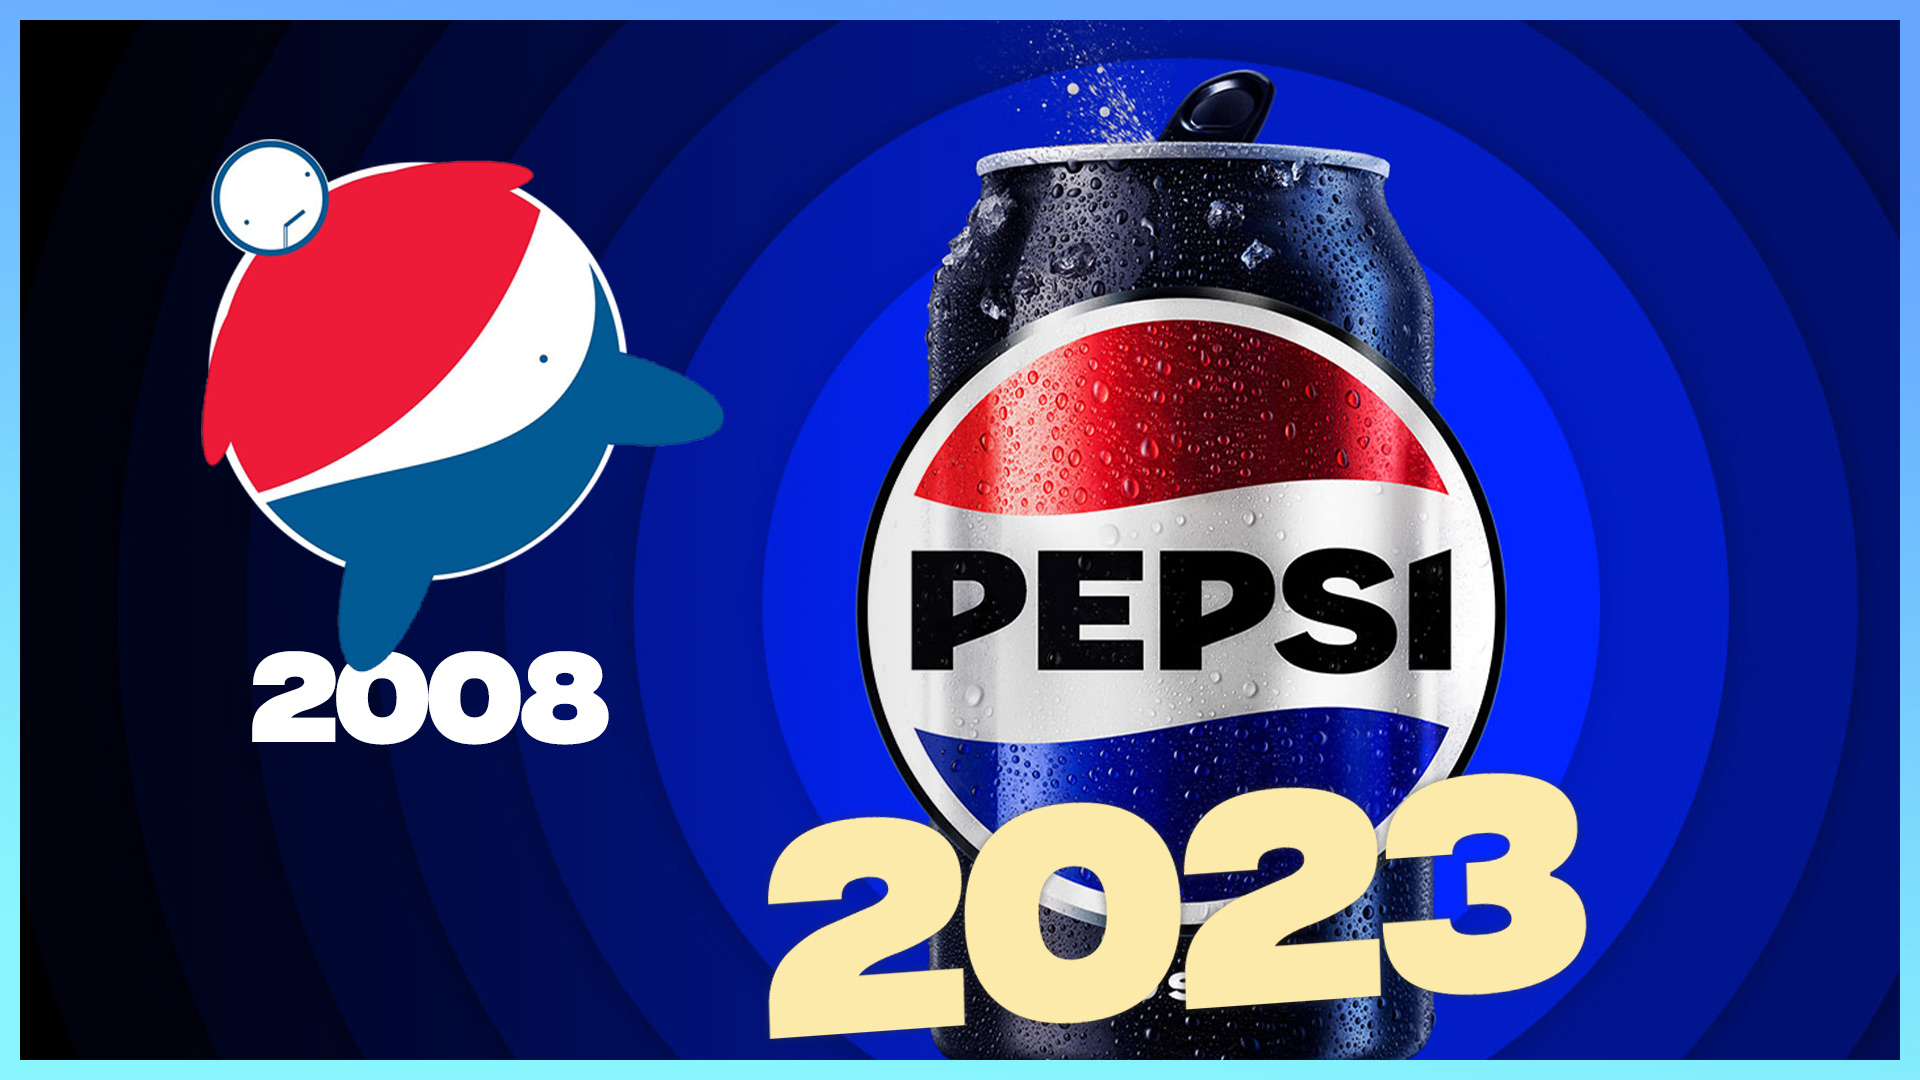 Analyse du Rebranding de PEPSI 2023